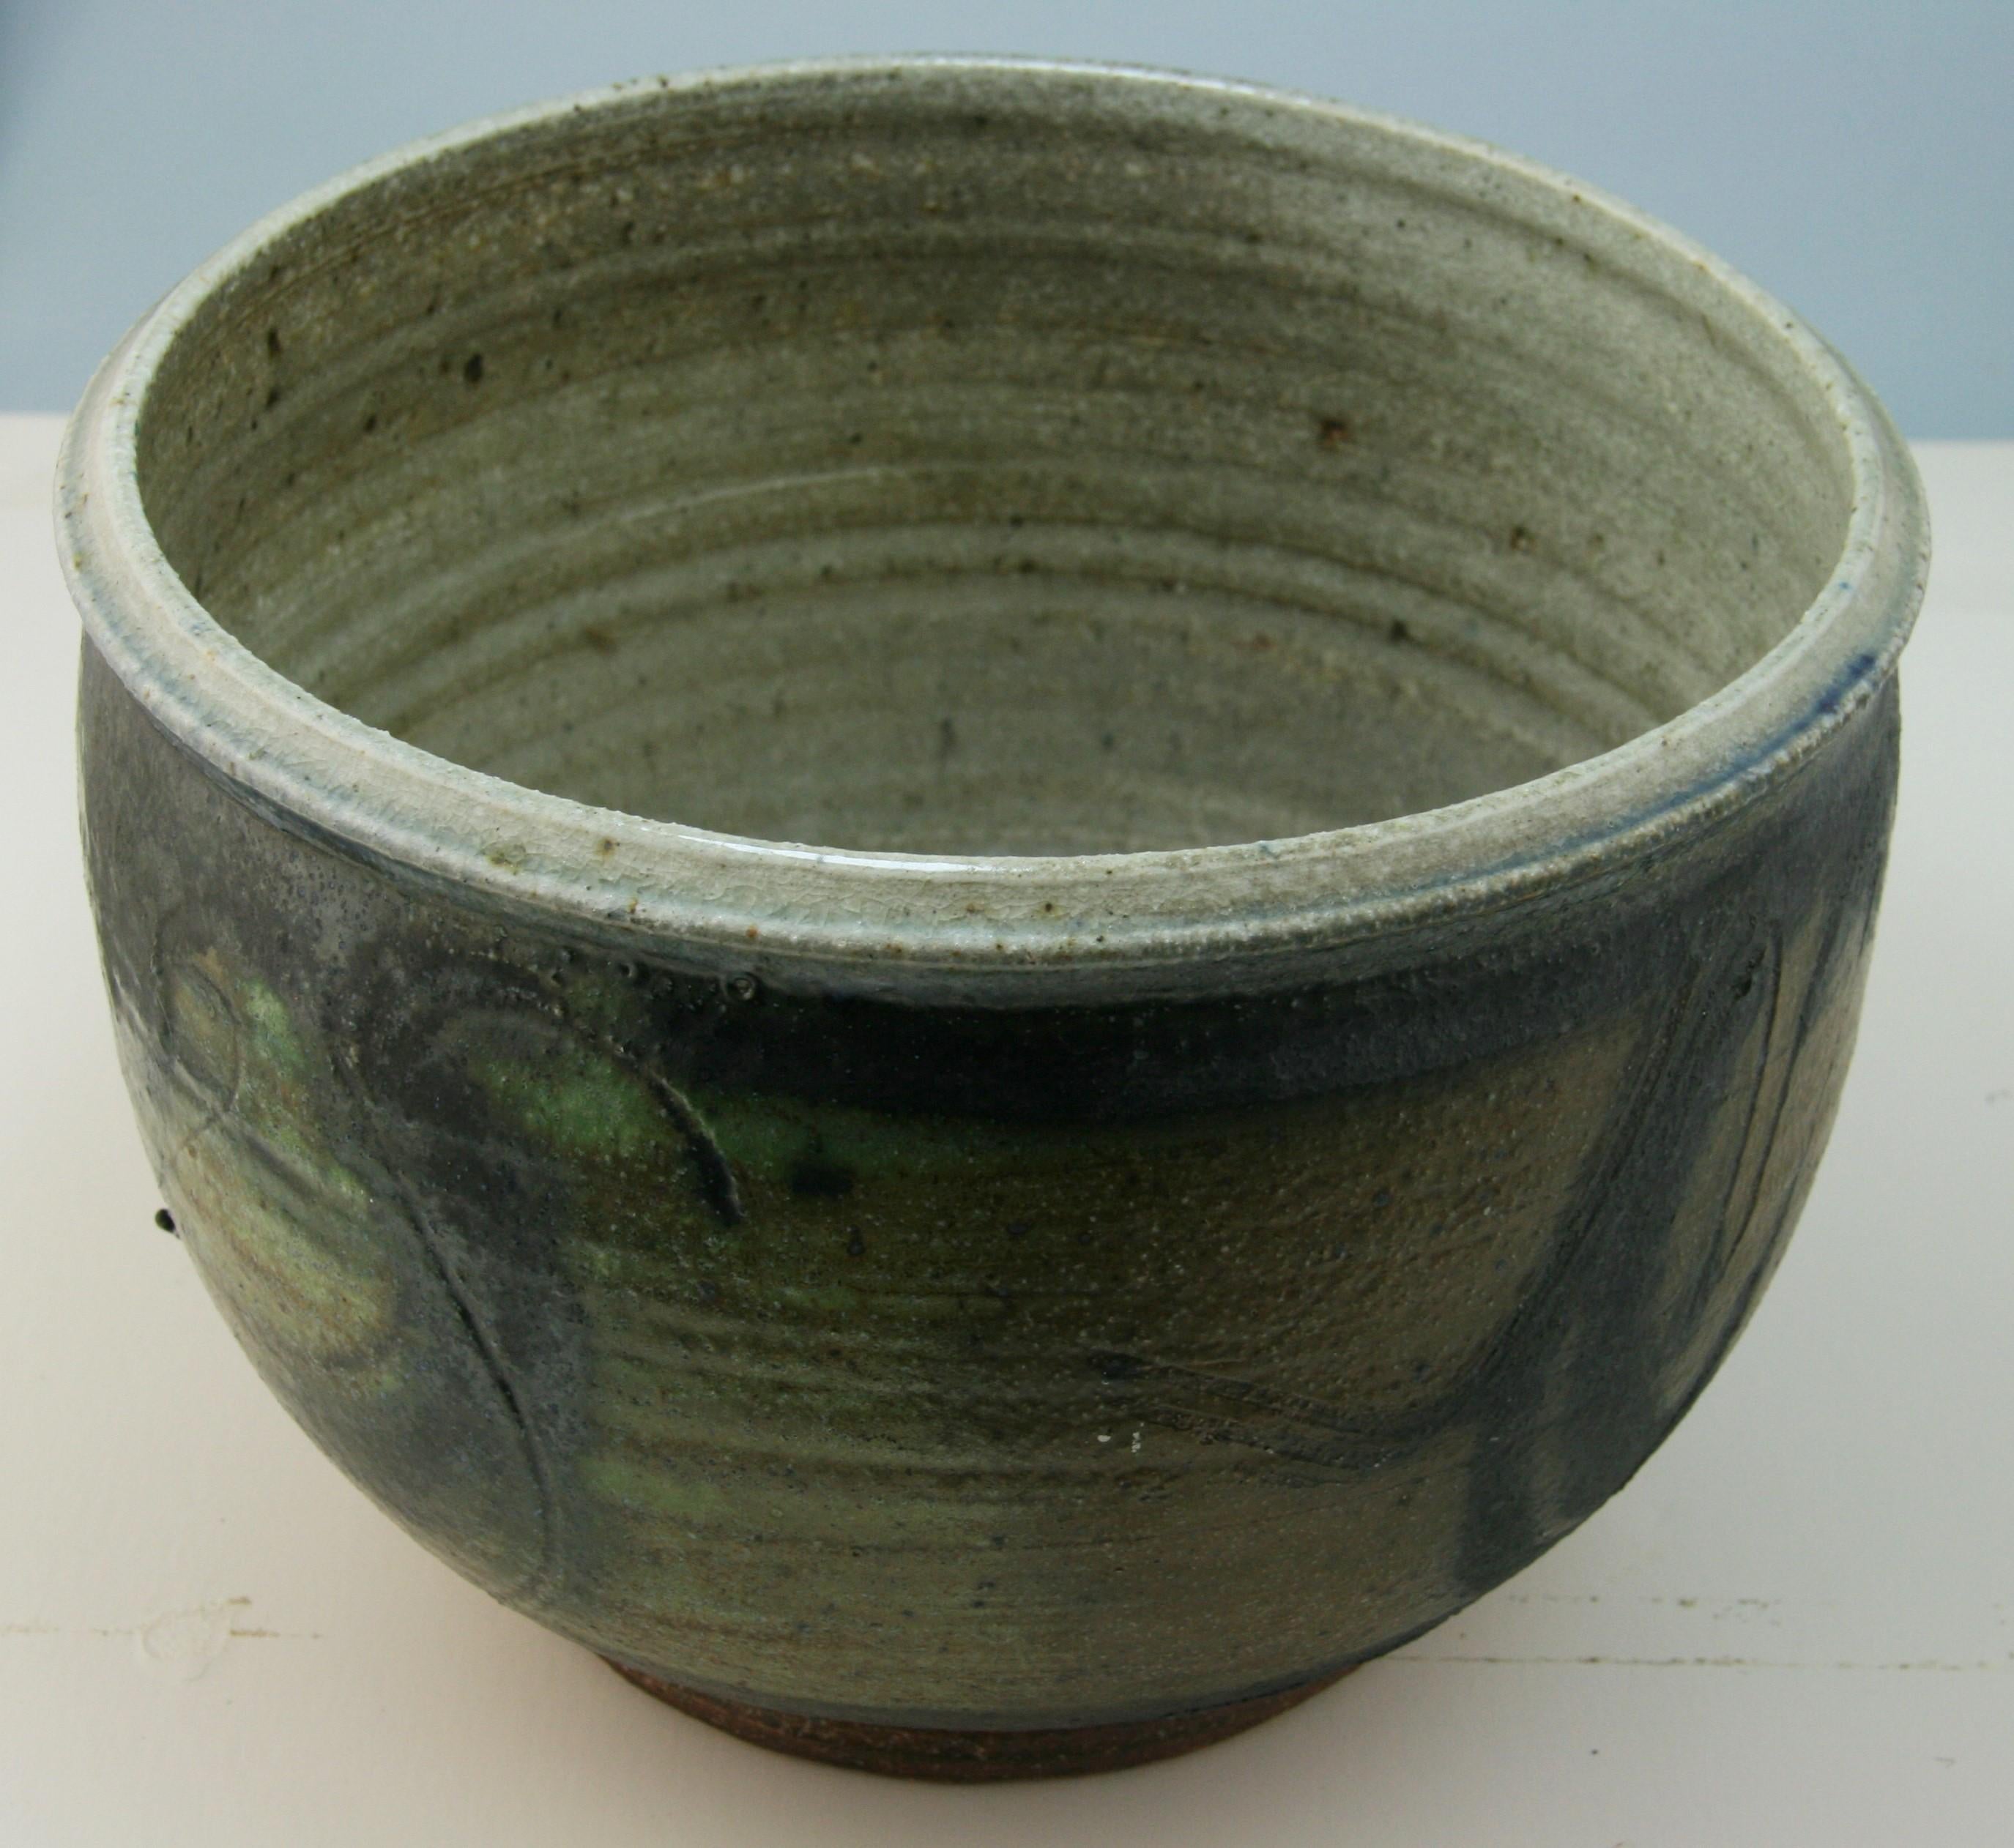 Hand-Crafted Japanese Glazed Ceramic Planter Bowl